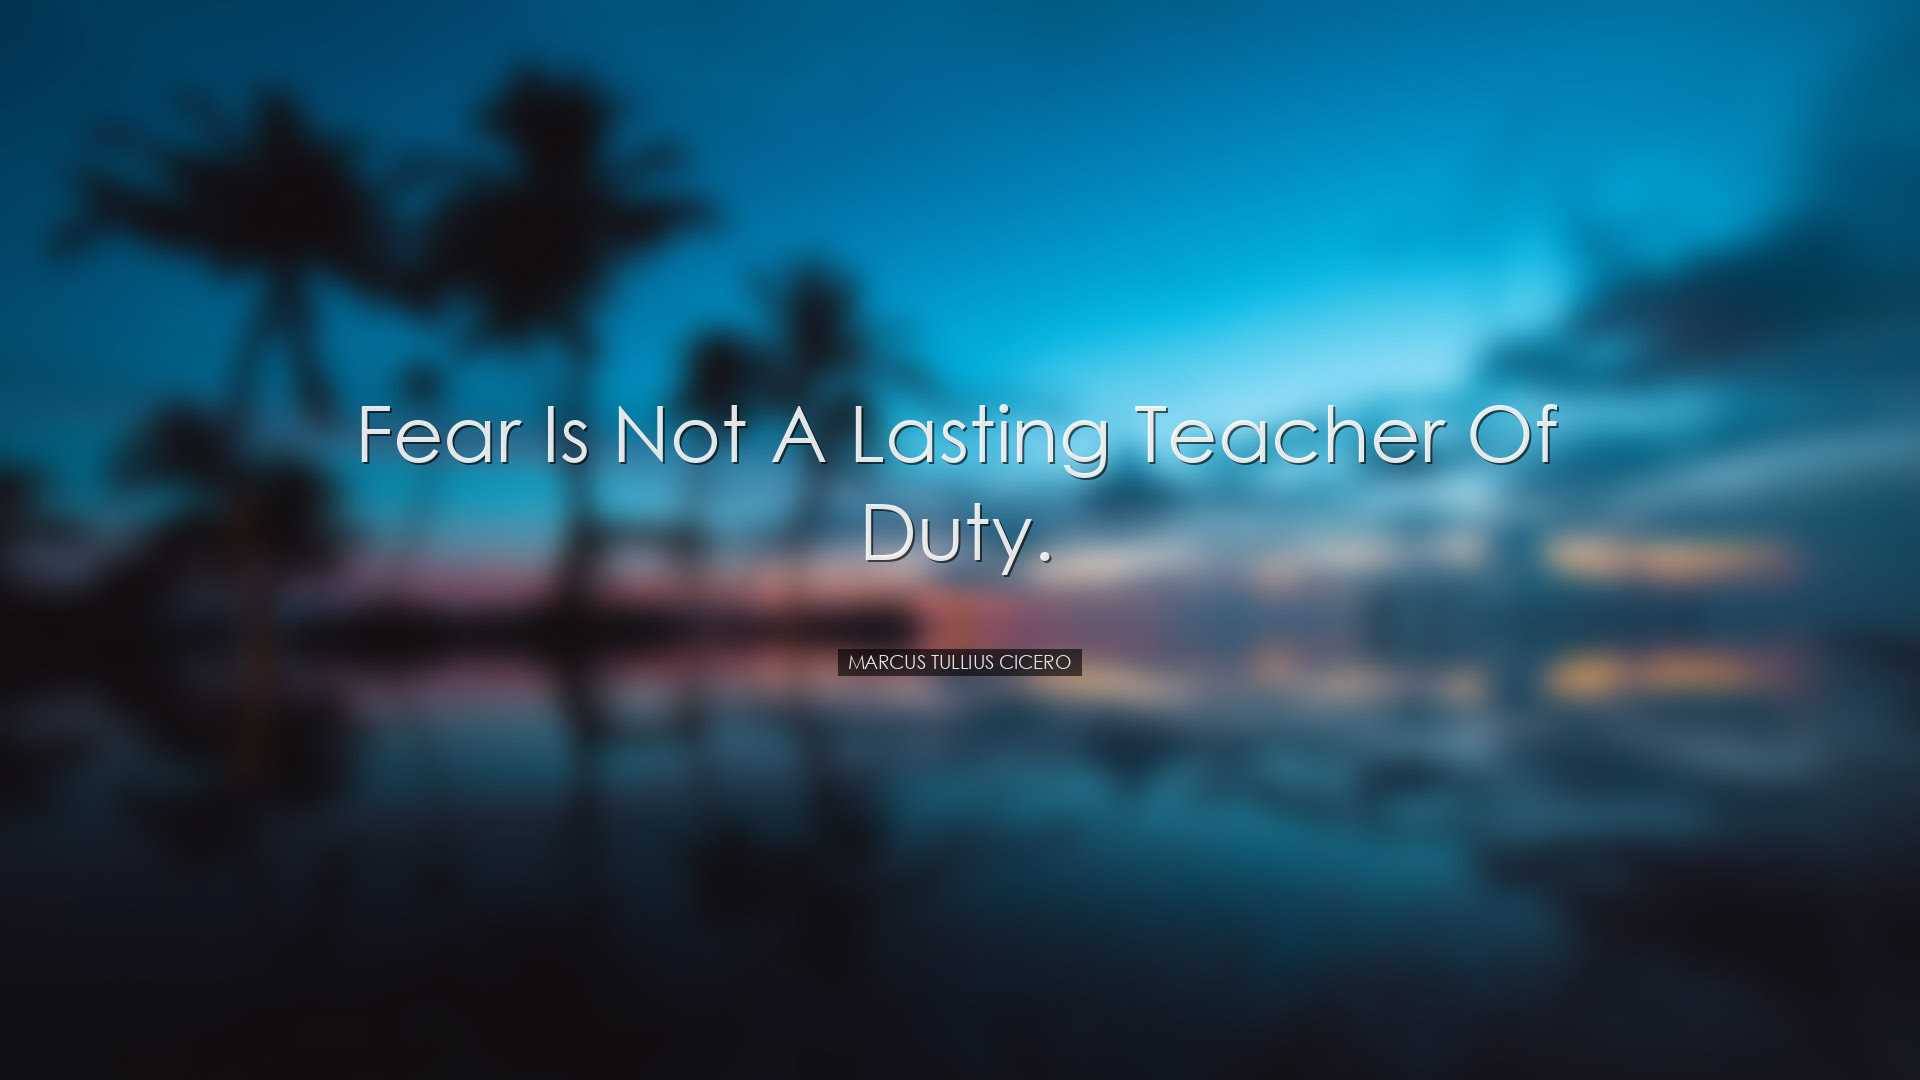 Fear is not a lasting teacher of duty. - Marcus Tullius Cicero